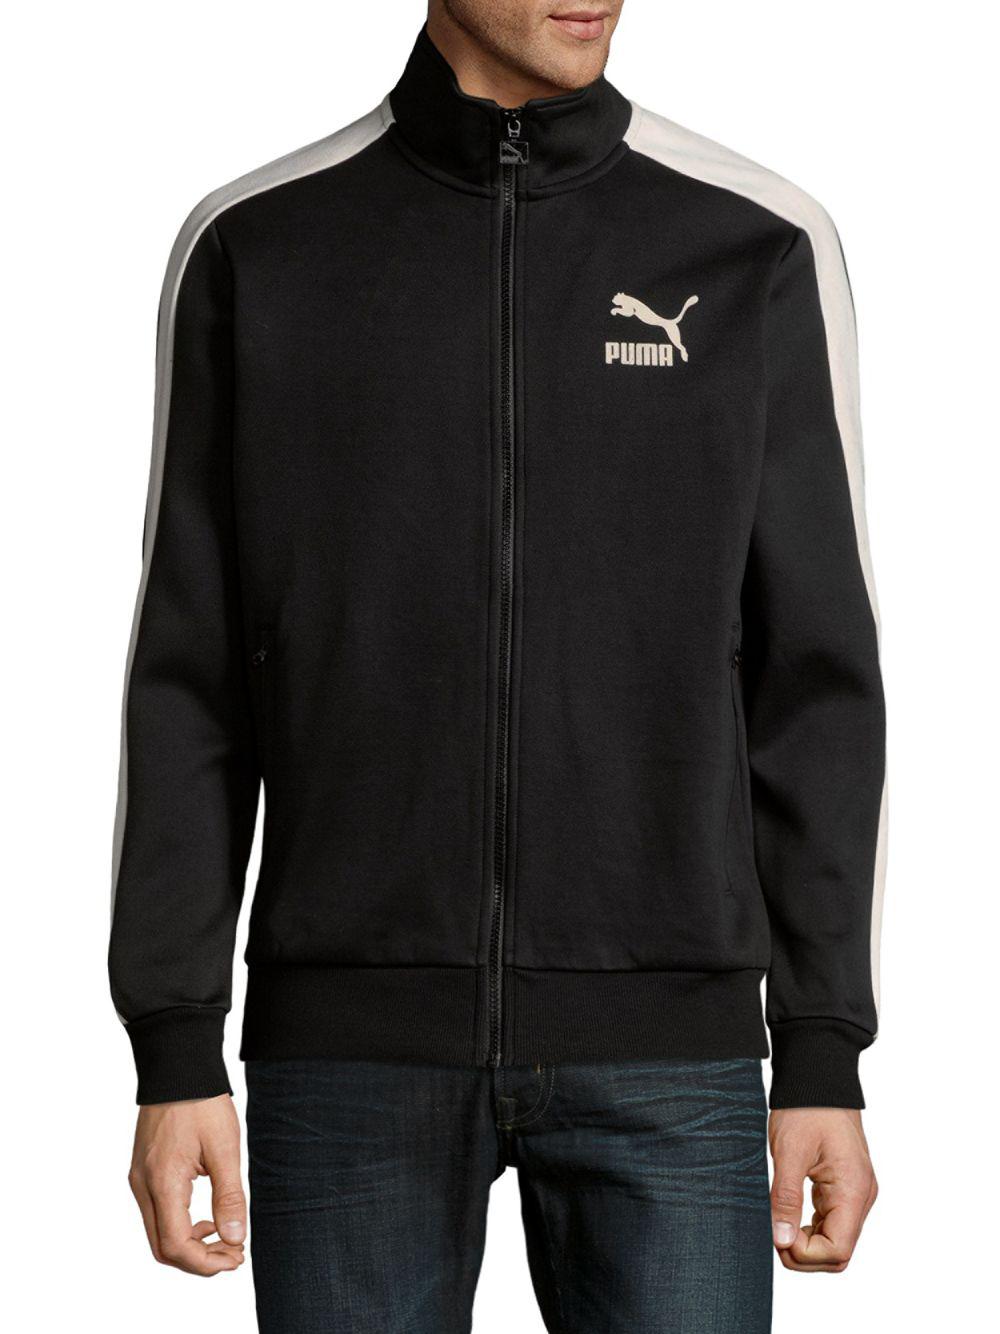 PUMA Cotton Logo Full Zip Jacket in Black for Men - Lyst